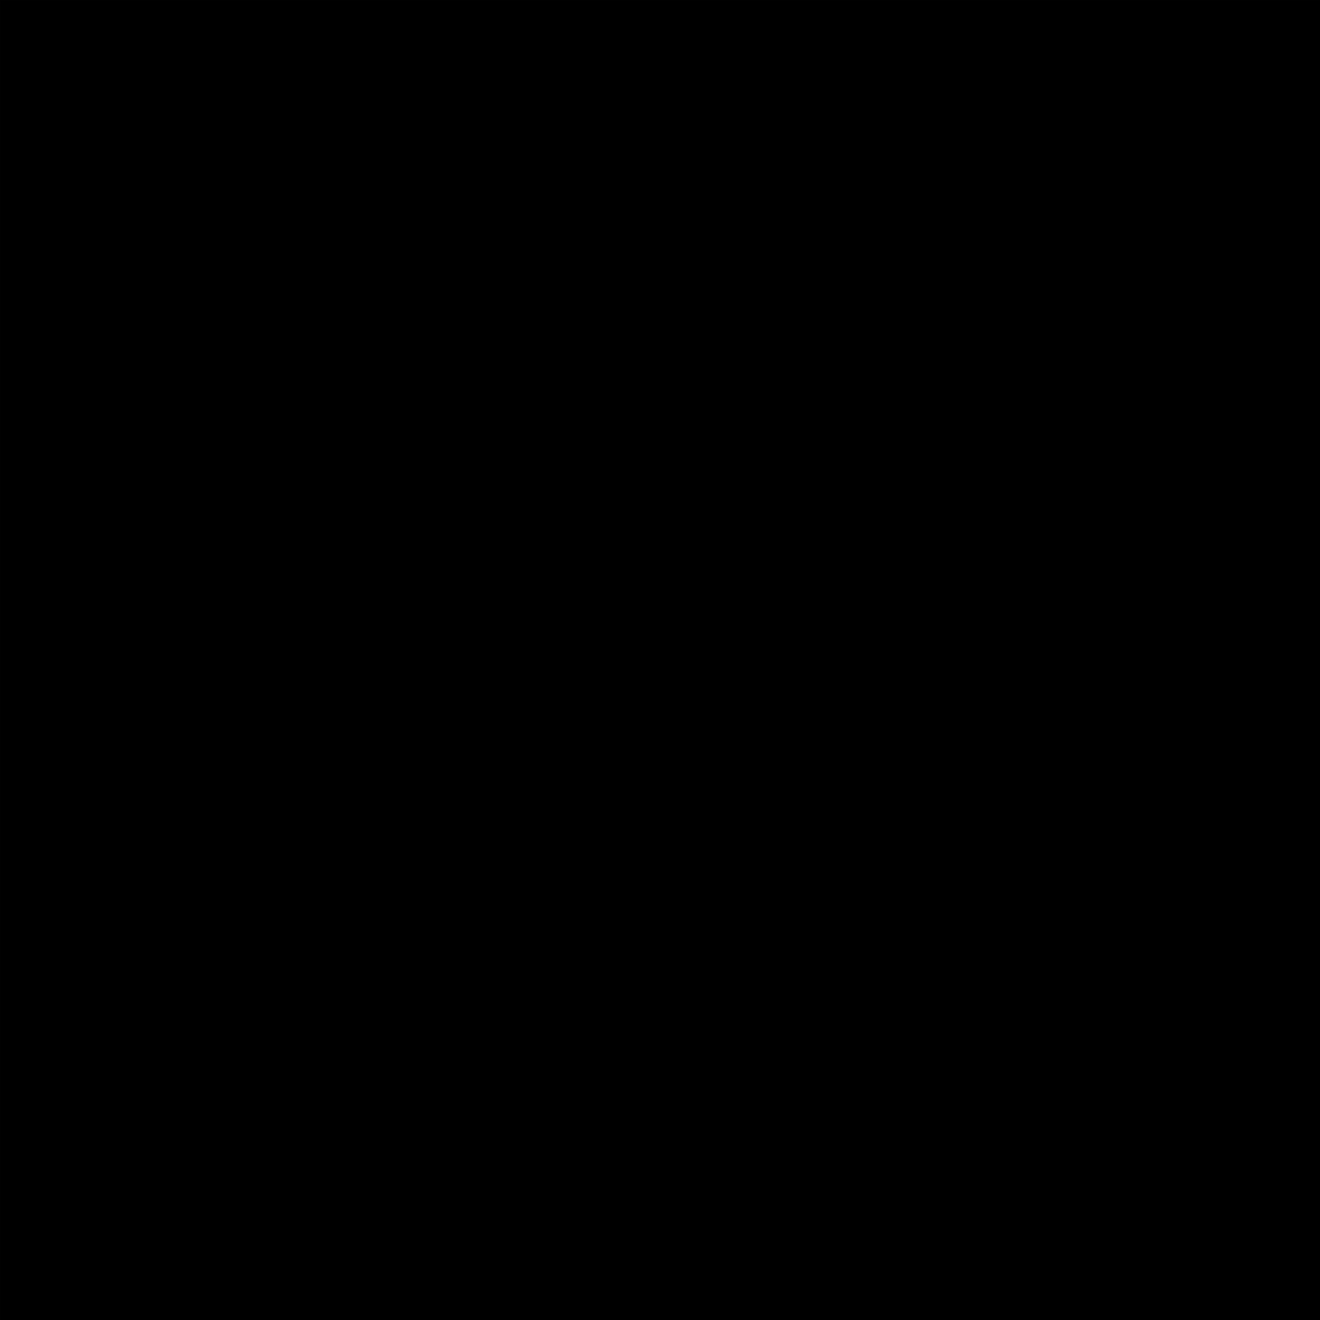 Pedrazzoli Bandsaws logo